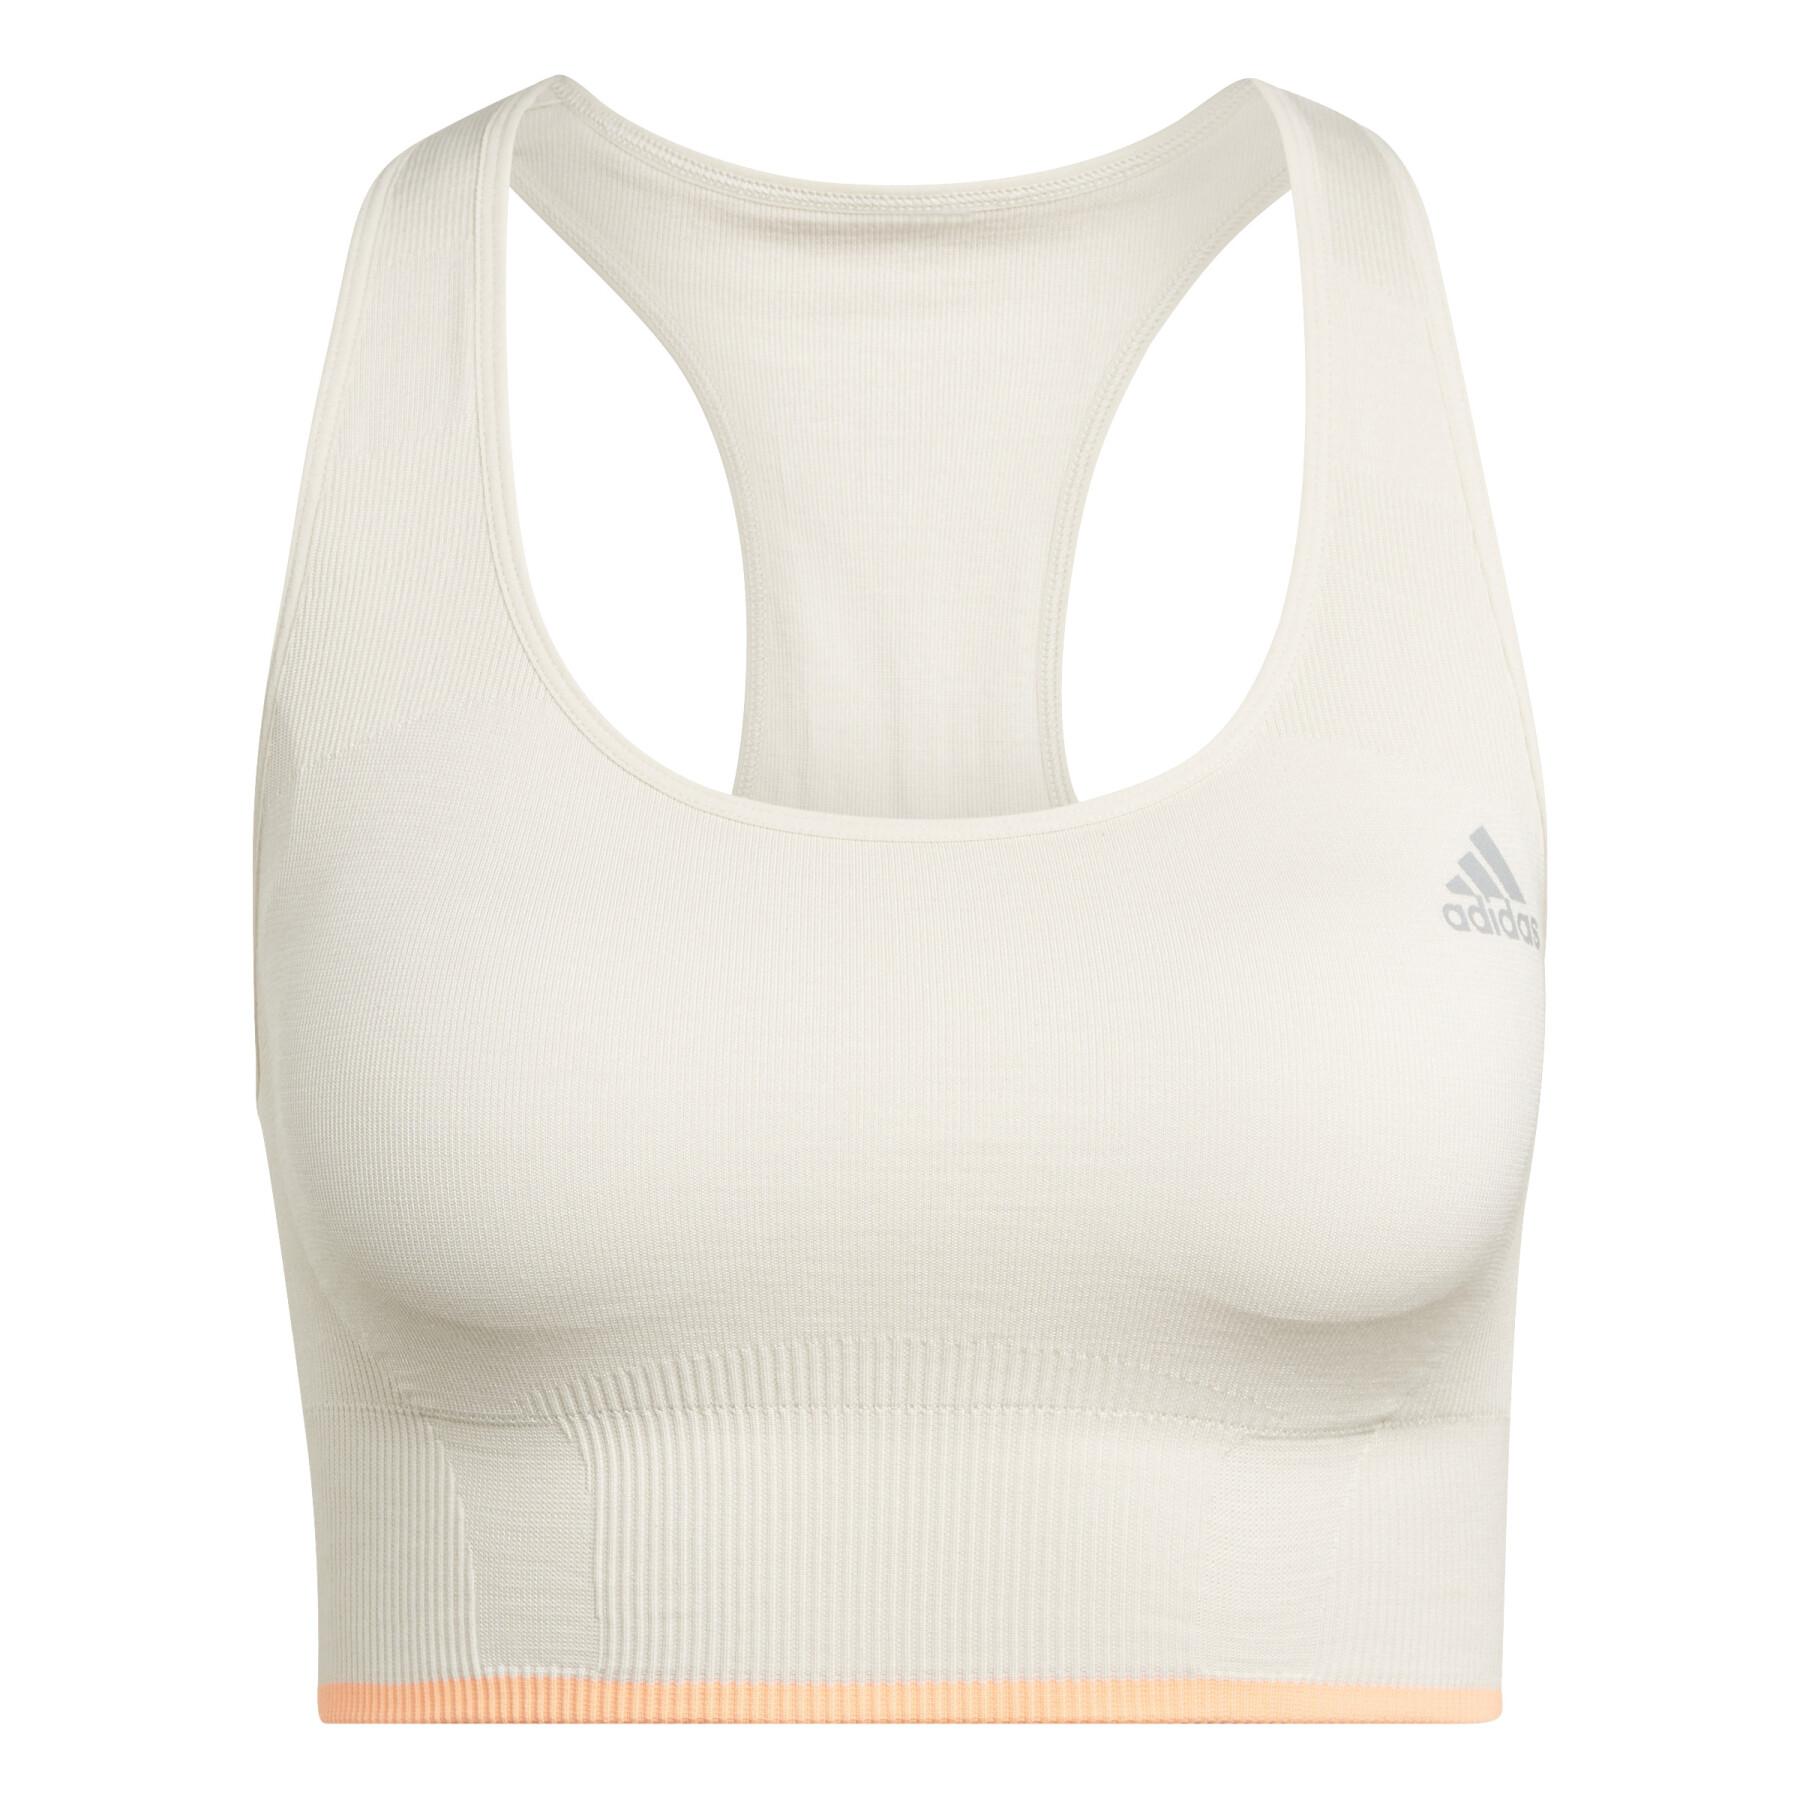 Seamless medium support bra in merino wool for women adidas Running -  adidas - Brands - Lifestyle